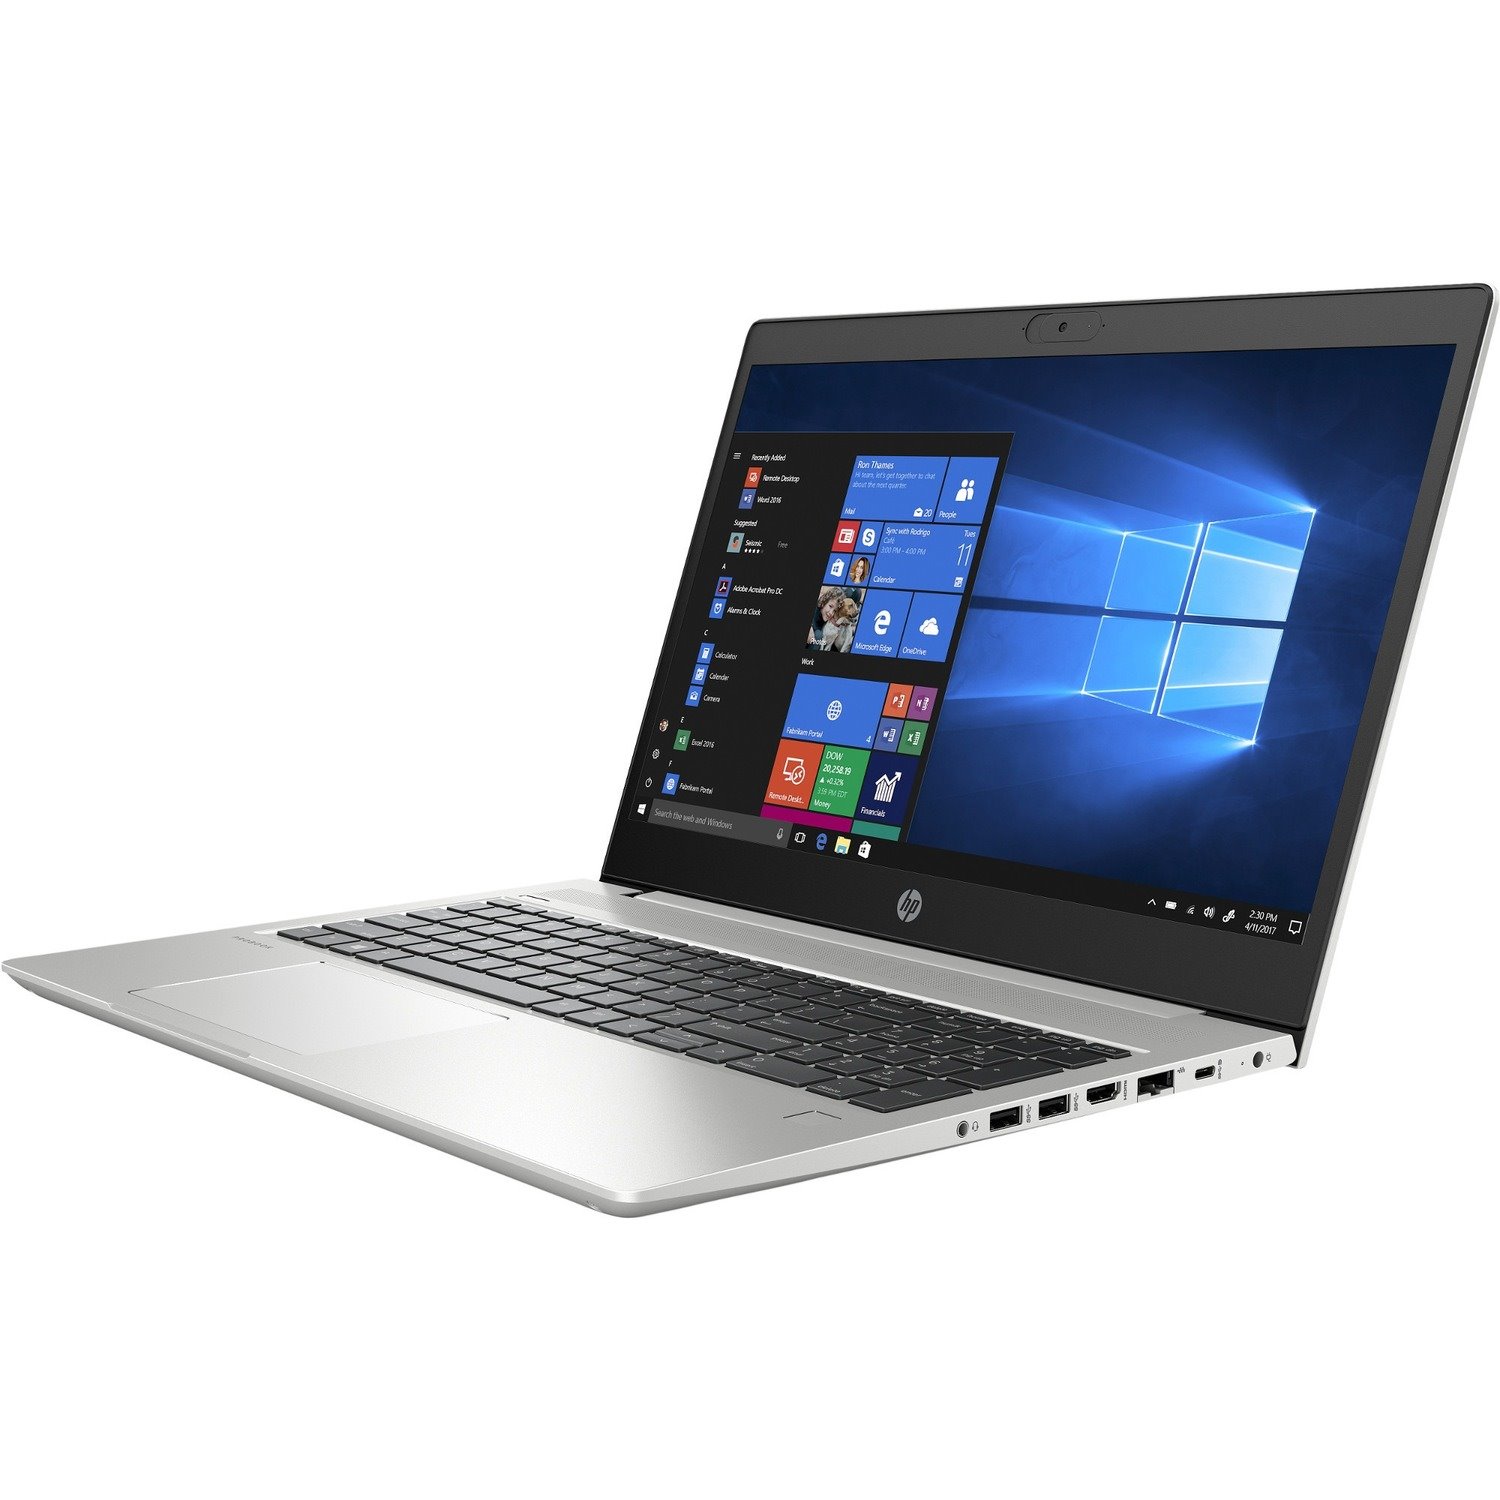 HP ProBook 455 G7 39.6 cm (15.6") Notebook - Full HD - 1920 x 1080 - AMD Ryzen 5 4500U Hexa-core (6 Core) 2.37 GHz - 8 GB Total RAM - 256 GB SSD - Bright Silver, Aluminium